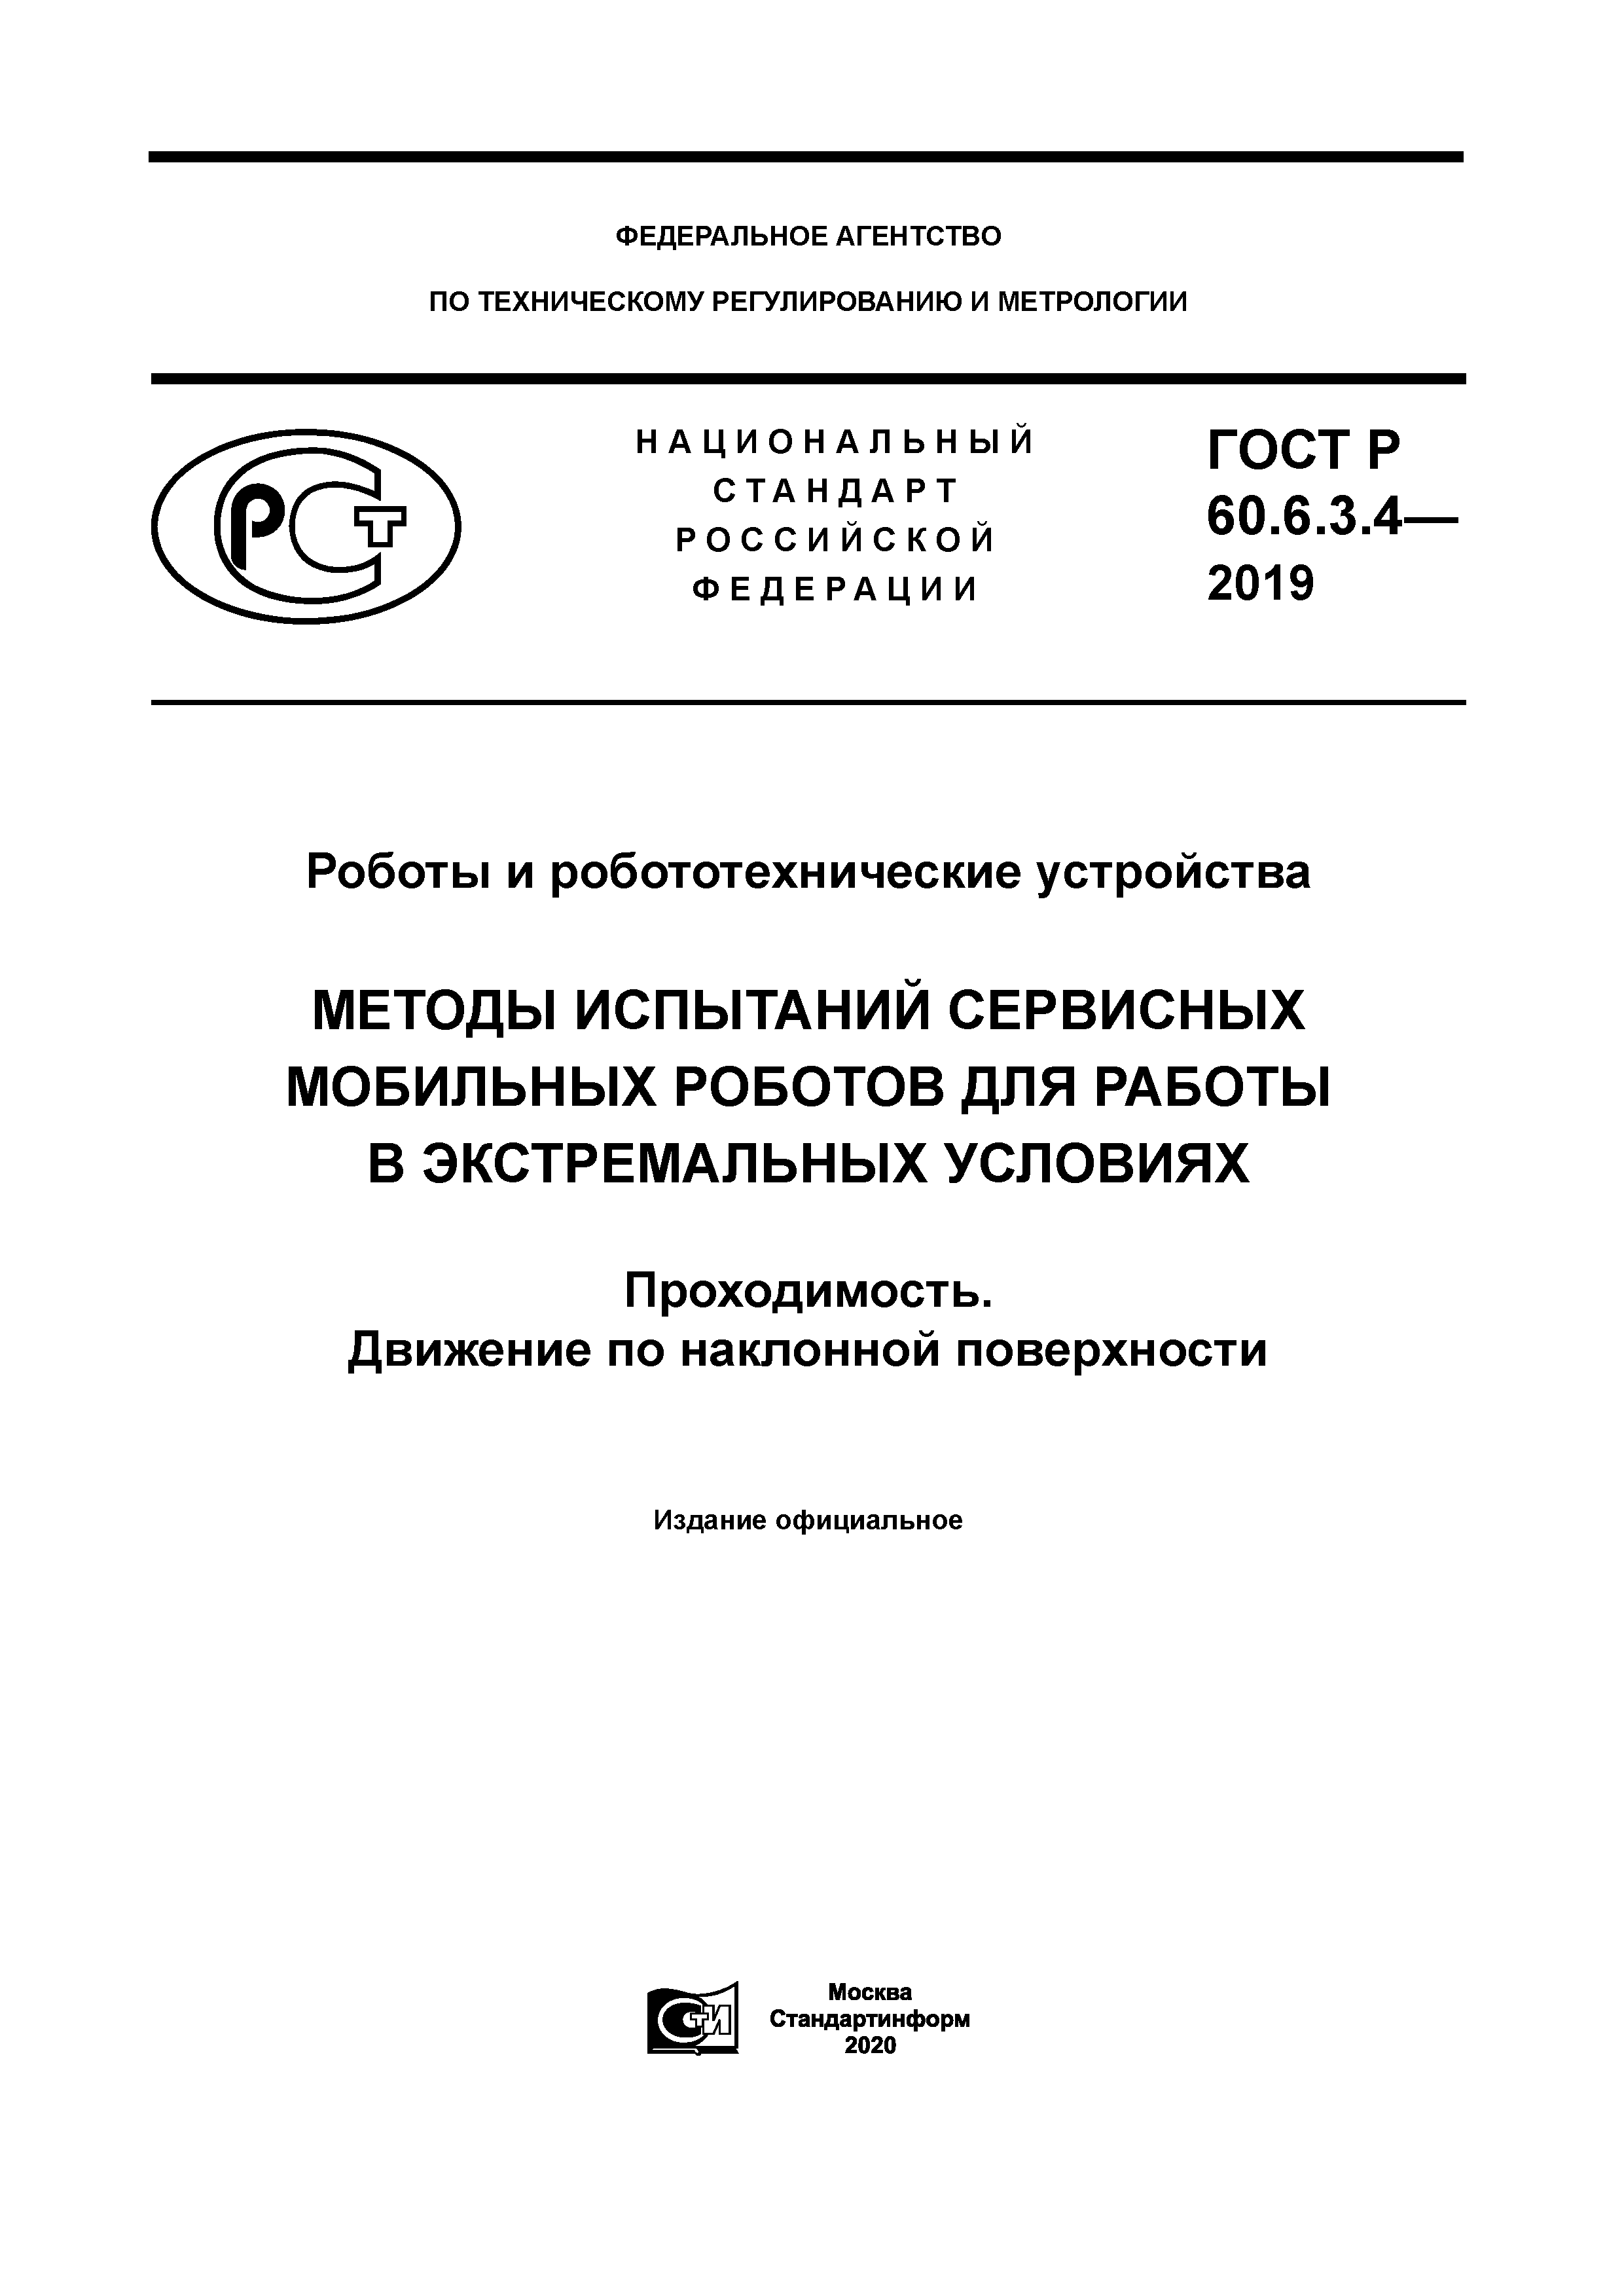 ГОСТ Р 60.6.3.4-2019